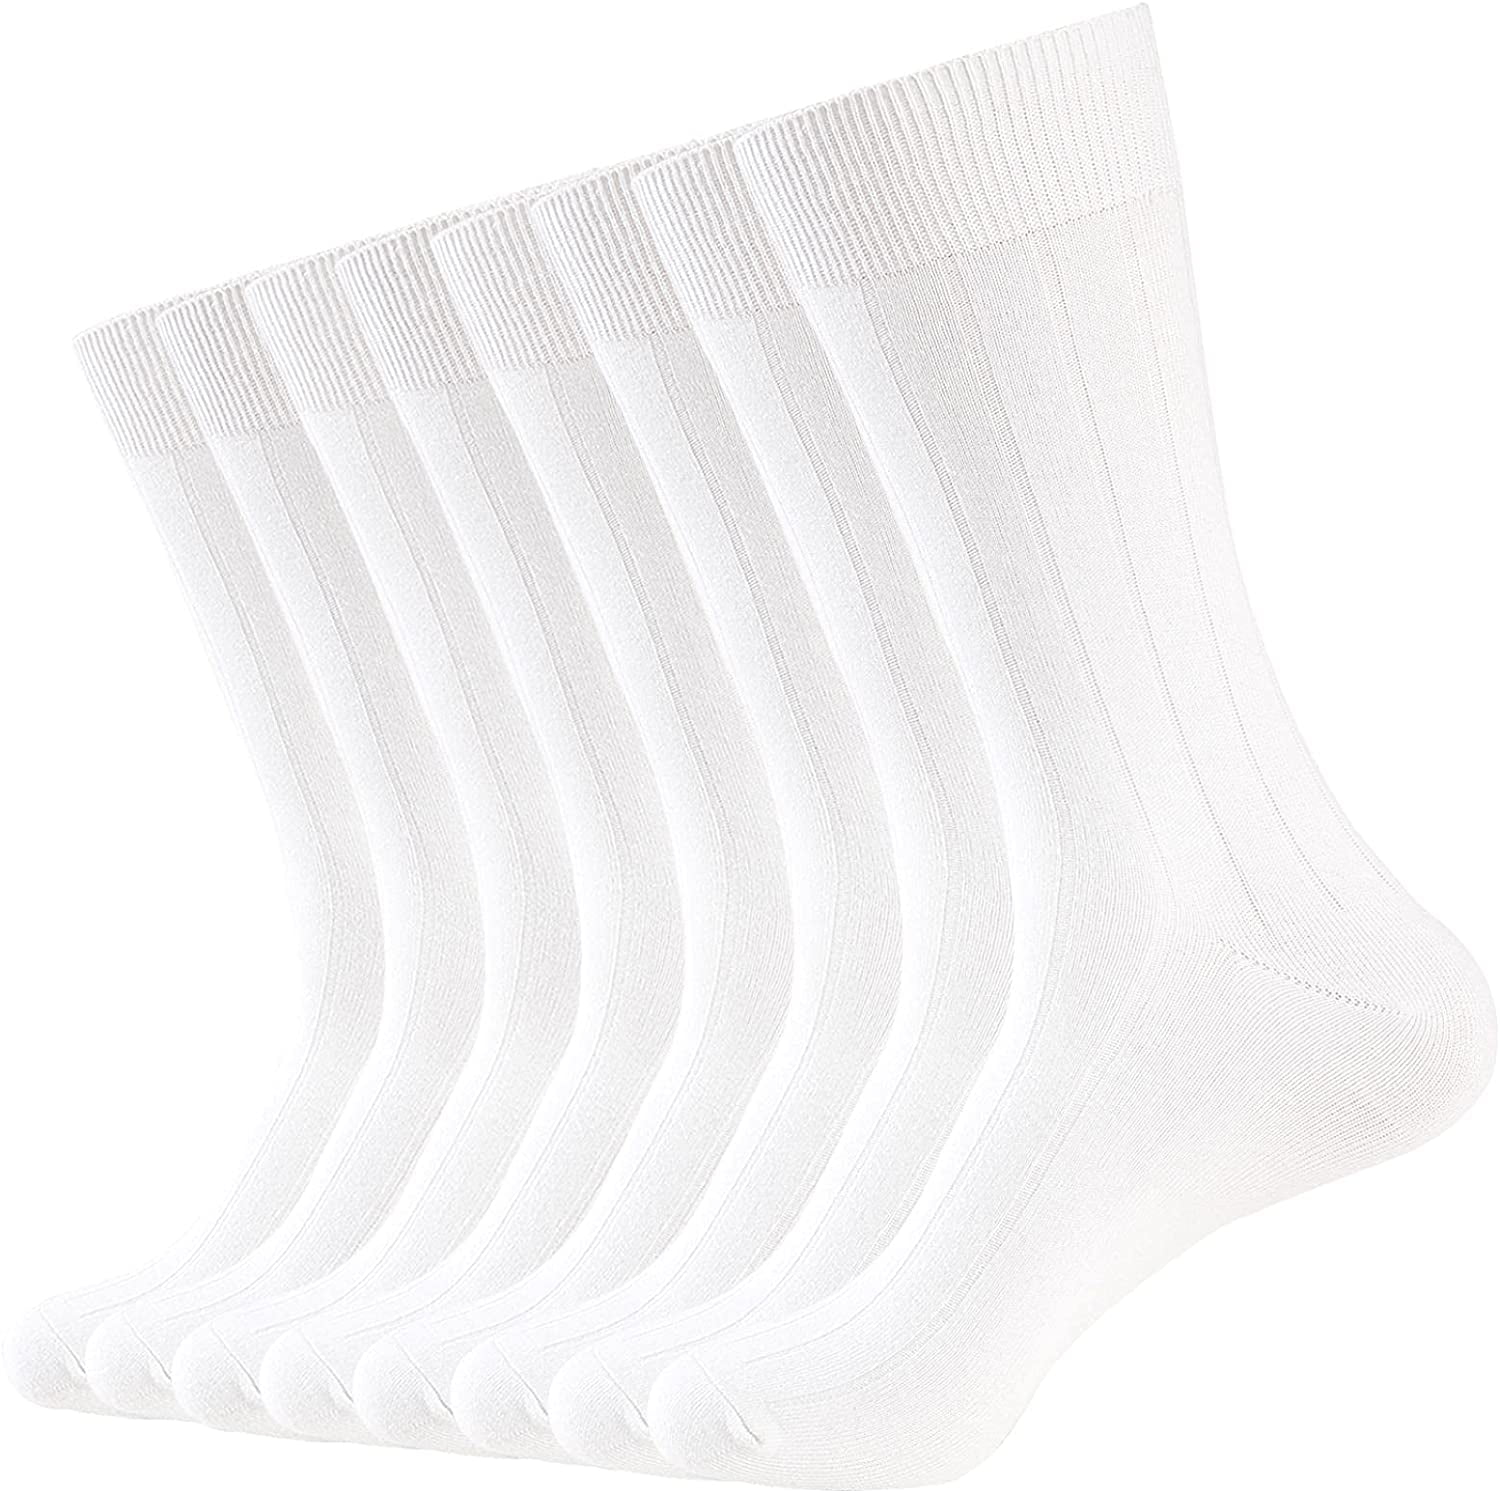 For Men Shoe Size 8-12 4 Pairs Men's Modern Classic Cotton Dress Socks 